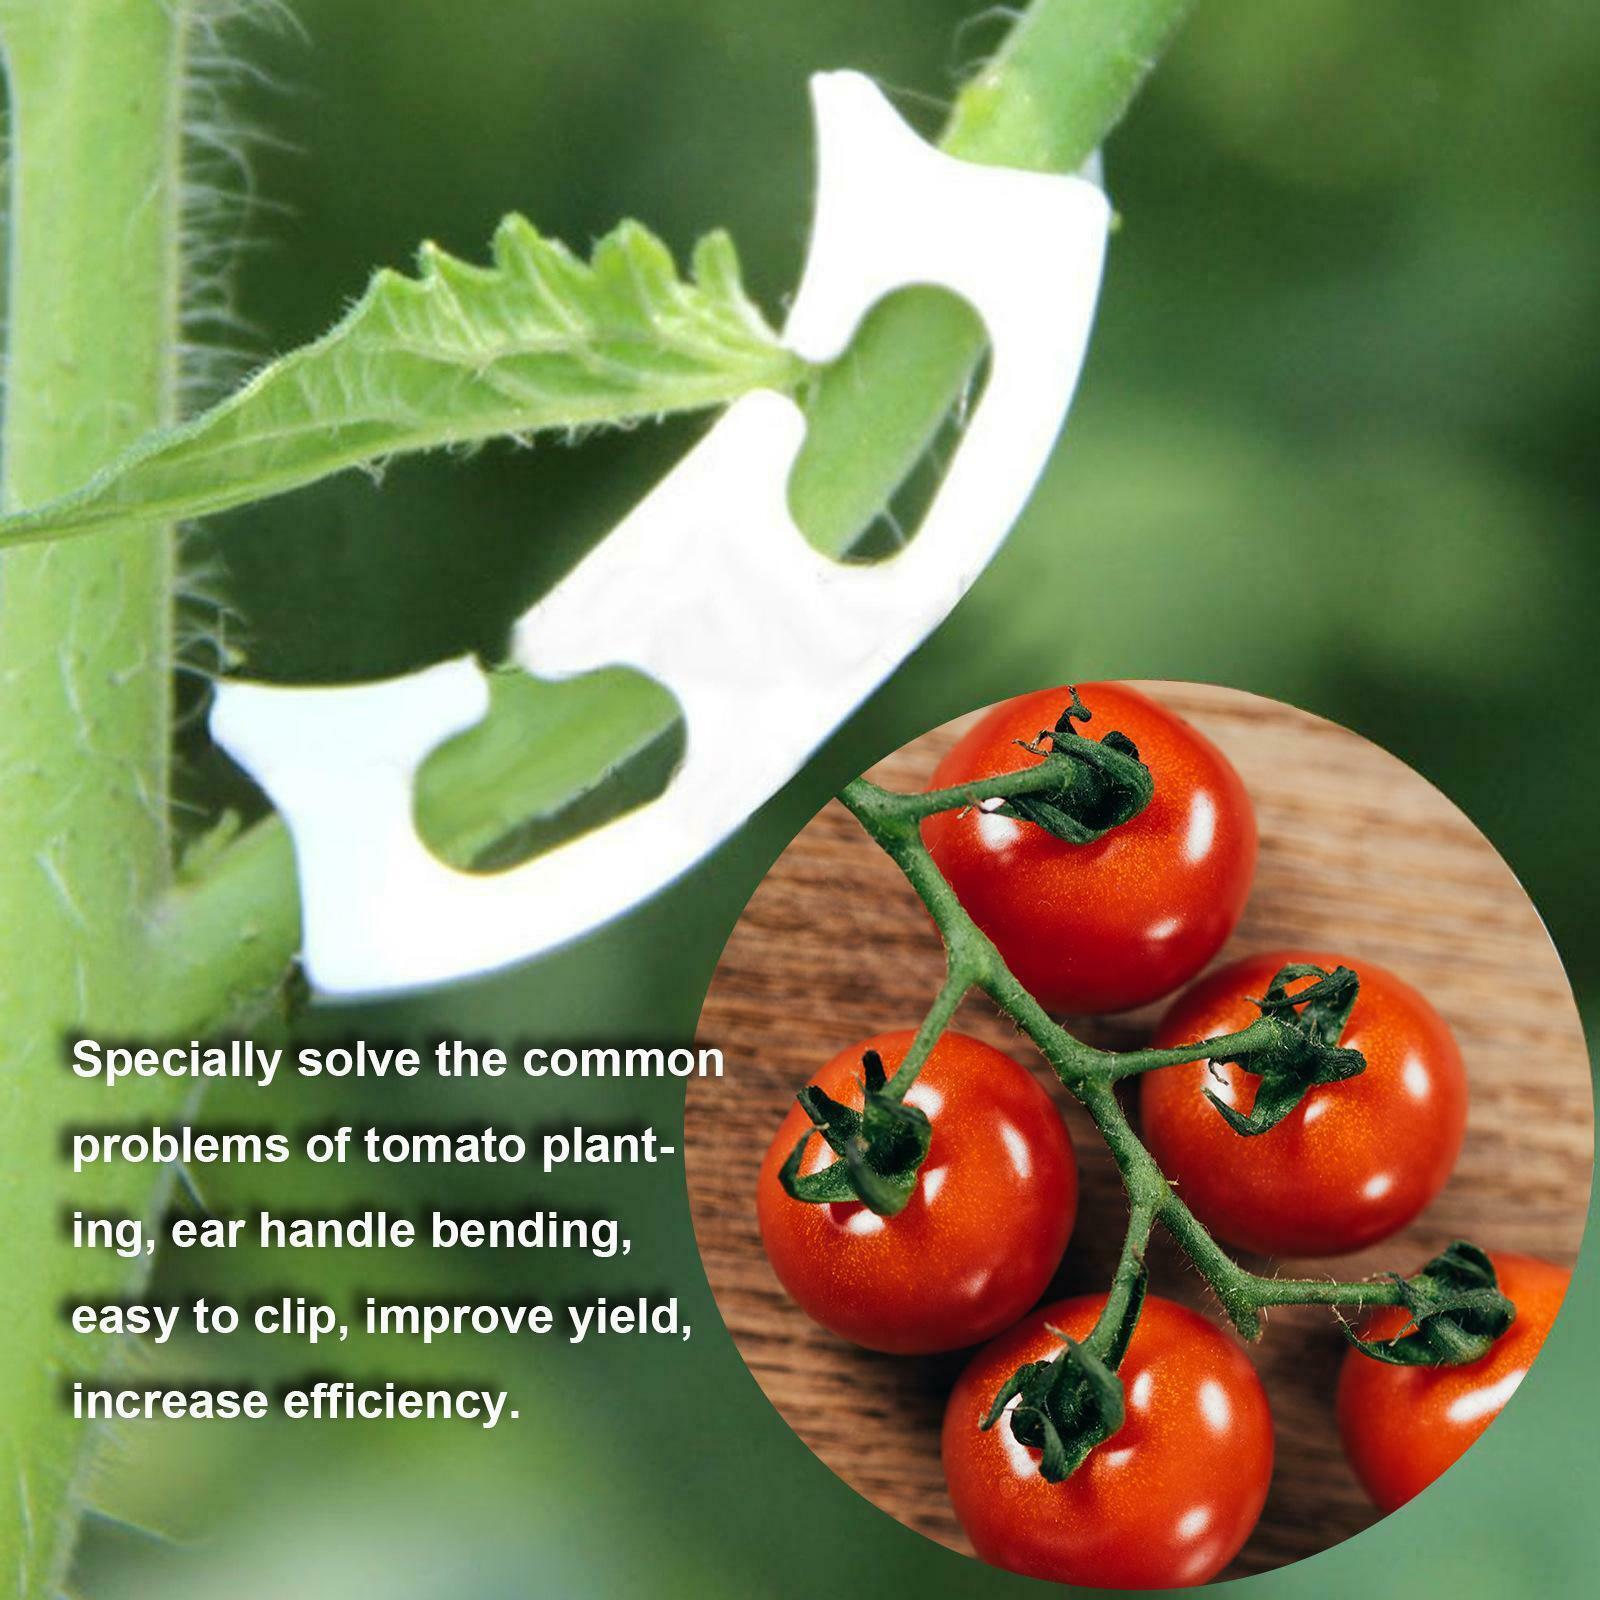 100pcs Plastic Plant Support Clips Garden Clips Anti-bending Cucumber Vines